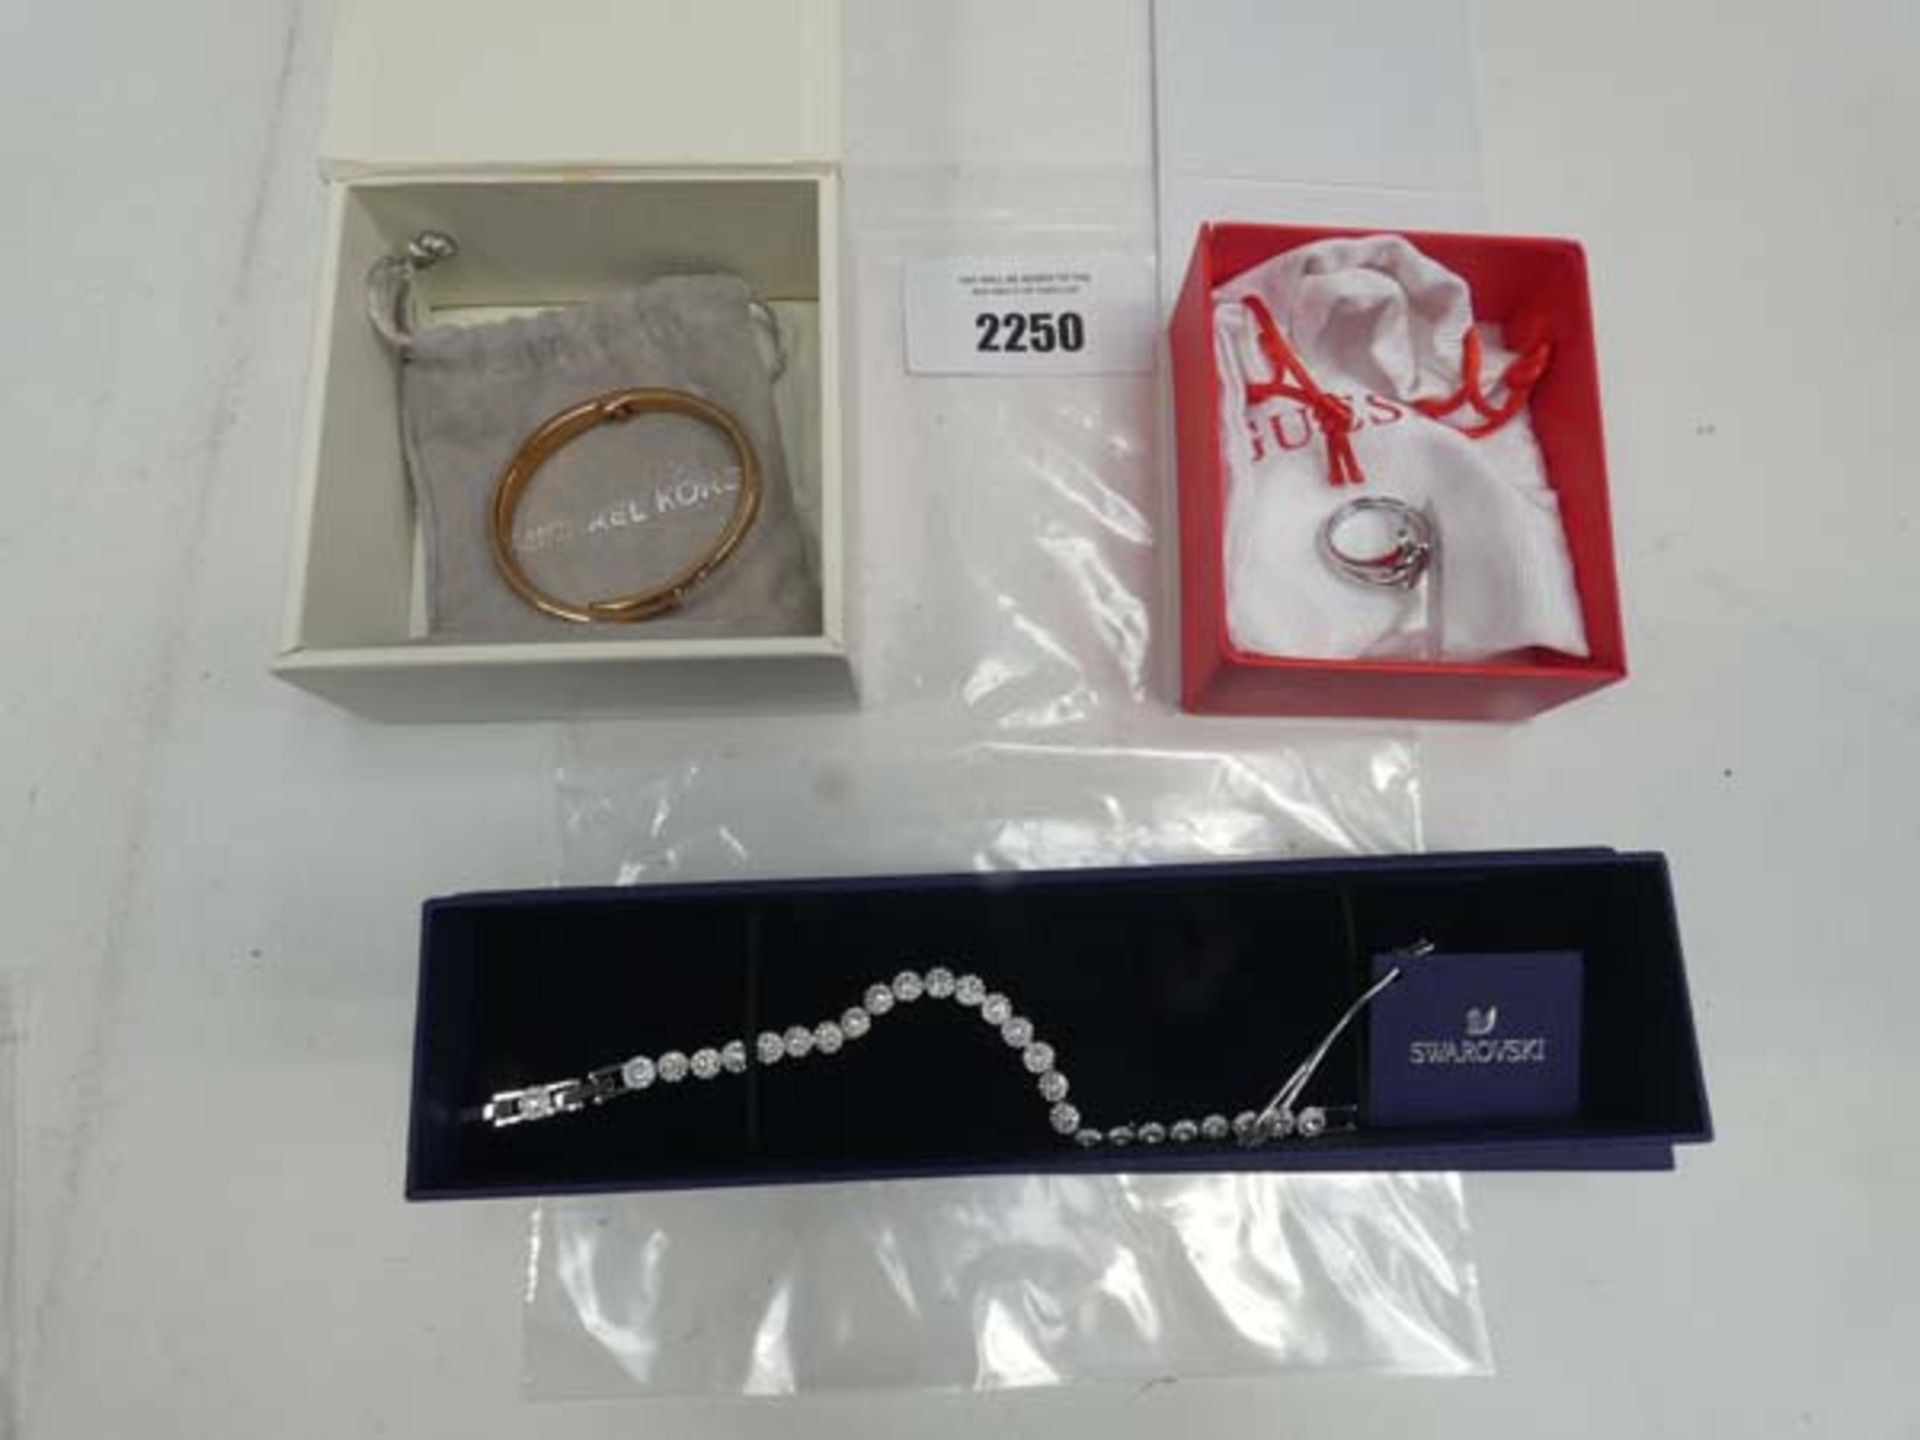 Michael Kors bangle, Guess ring and Swarovski bracelet